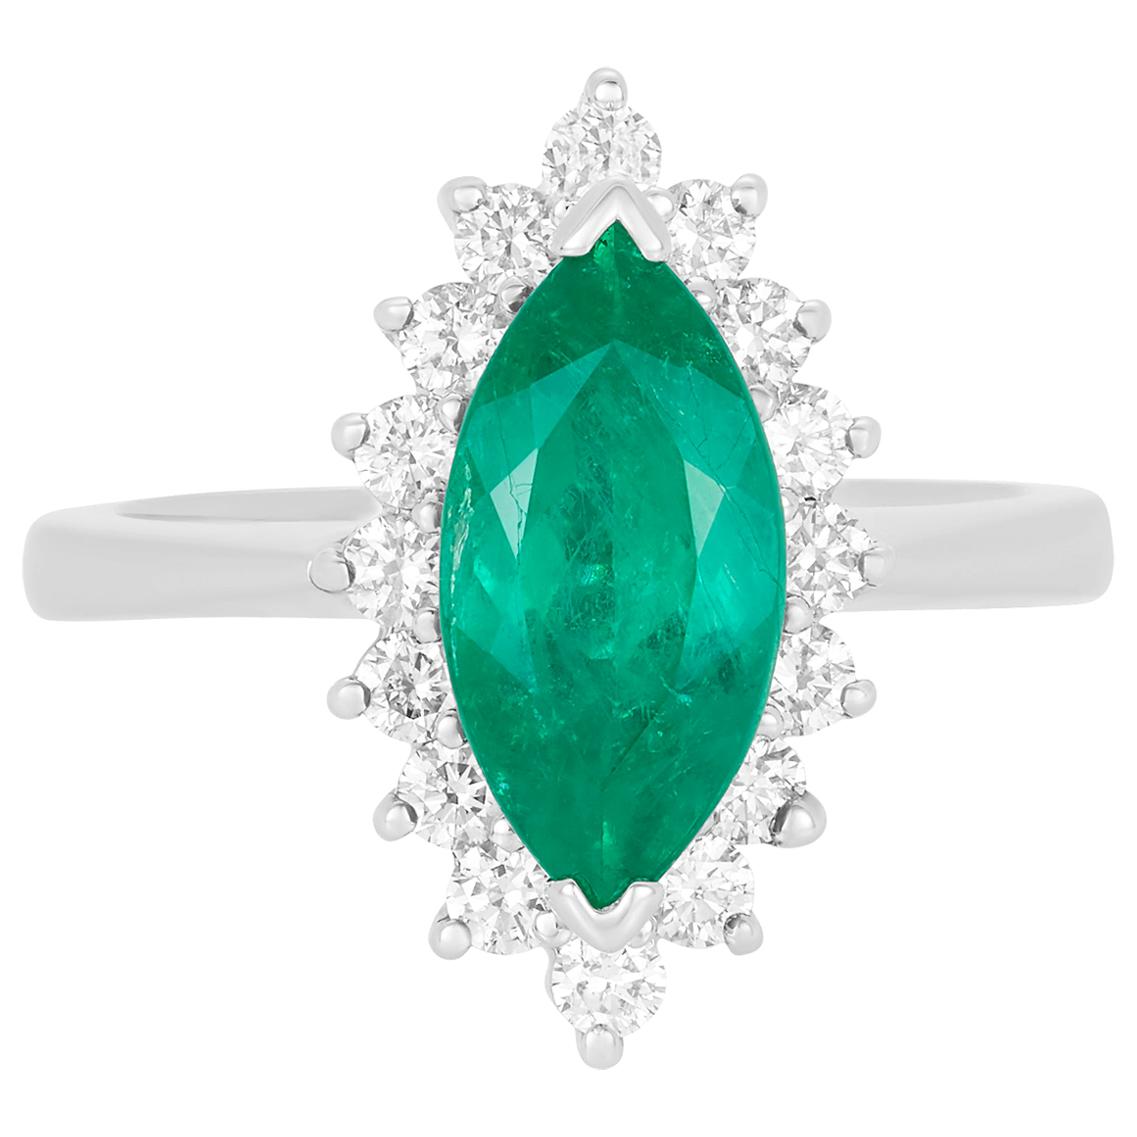 3.26 Carat Marquise Emerald Halo Diamond Ring in 18 Karat White Gold